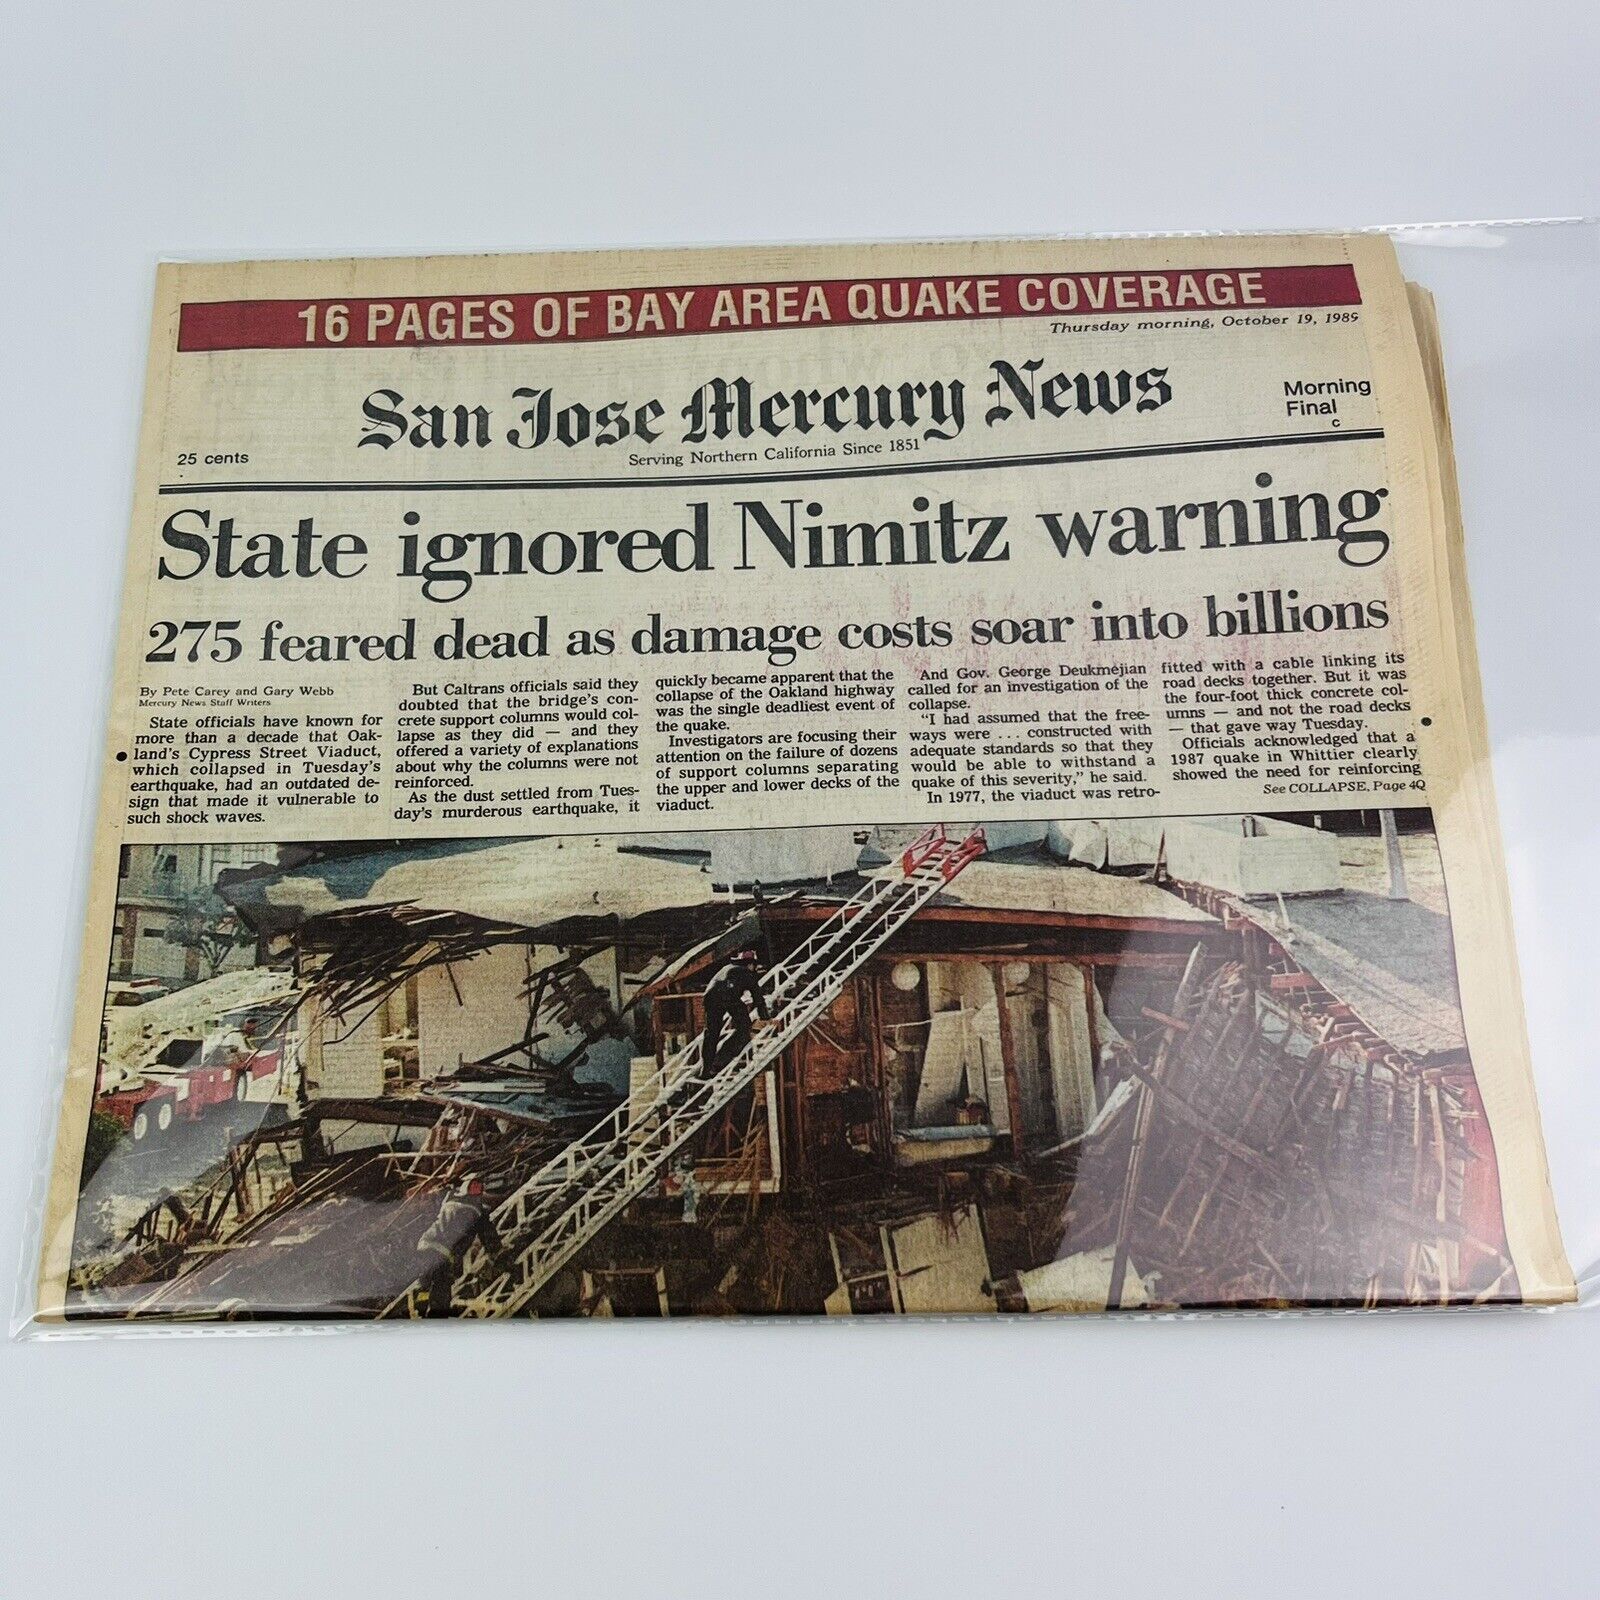 San Jose Mercury News Newspaper Oct 19, 1989 San Francisco Bay Earthquake Issue